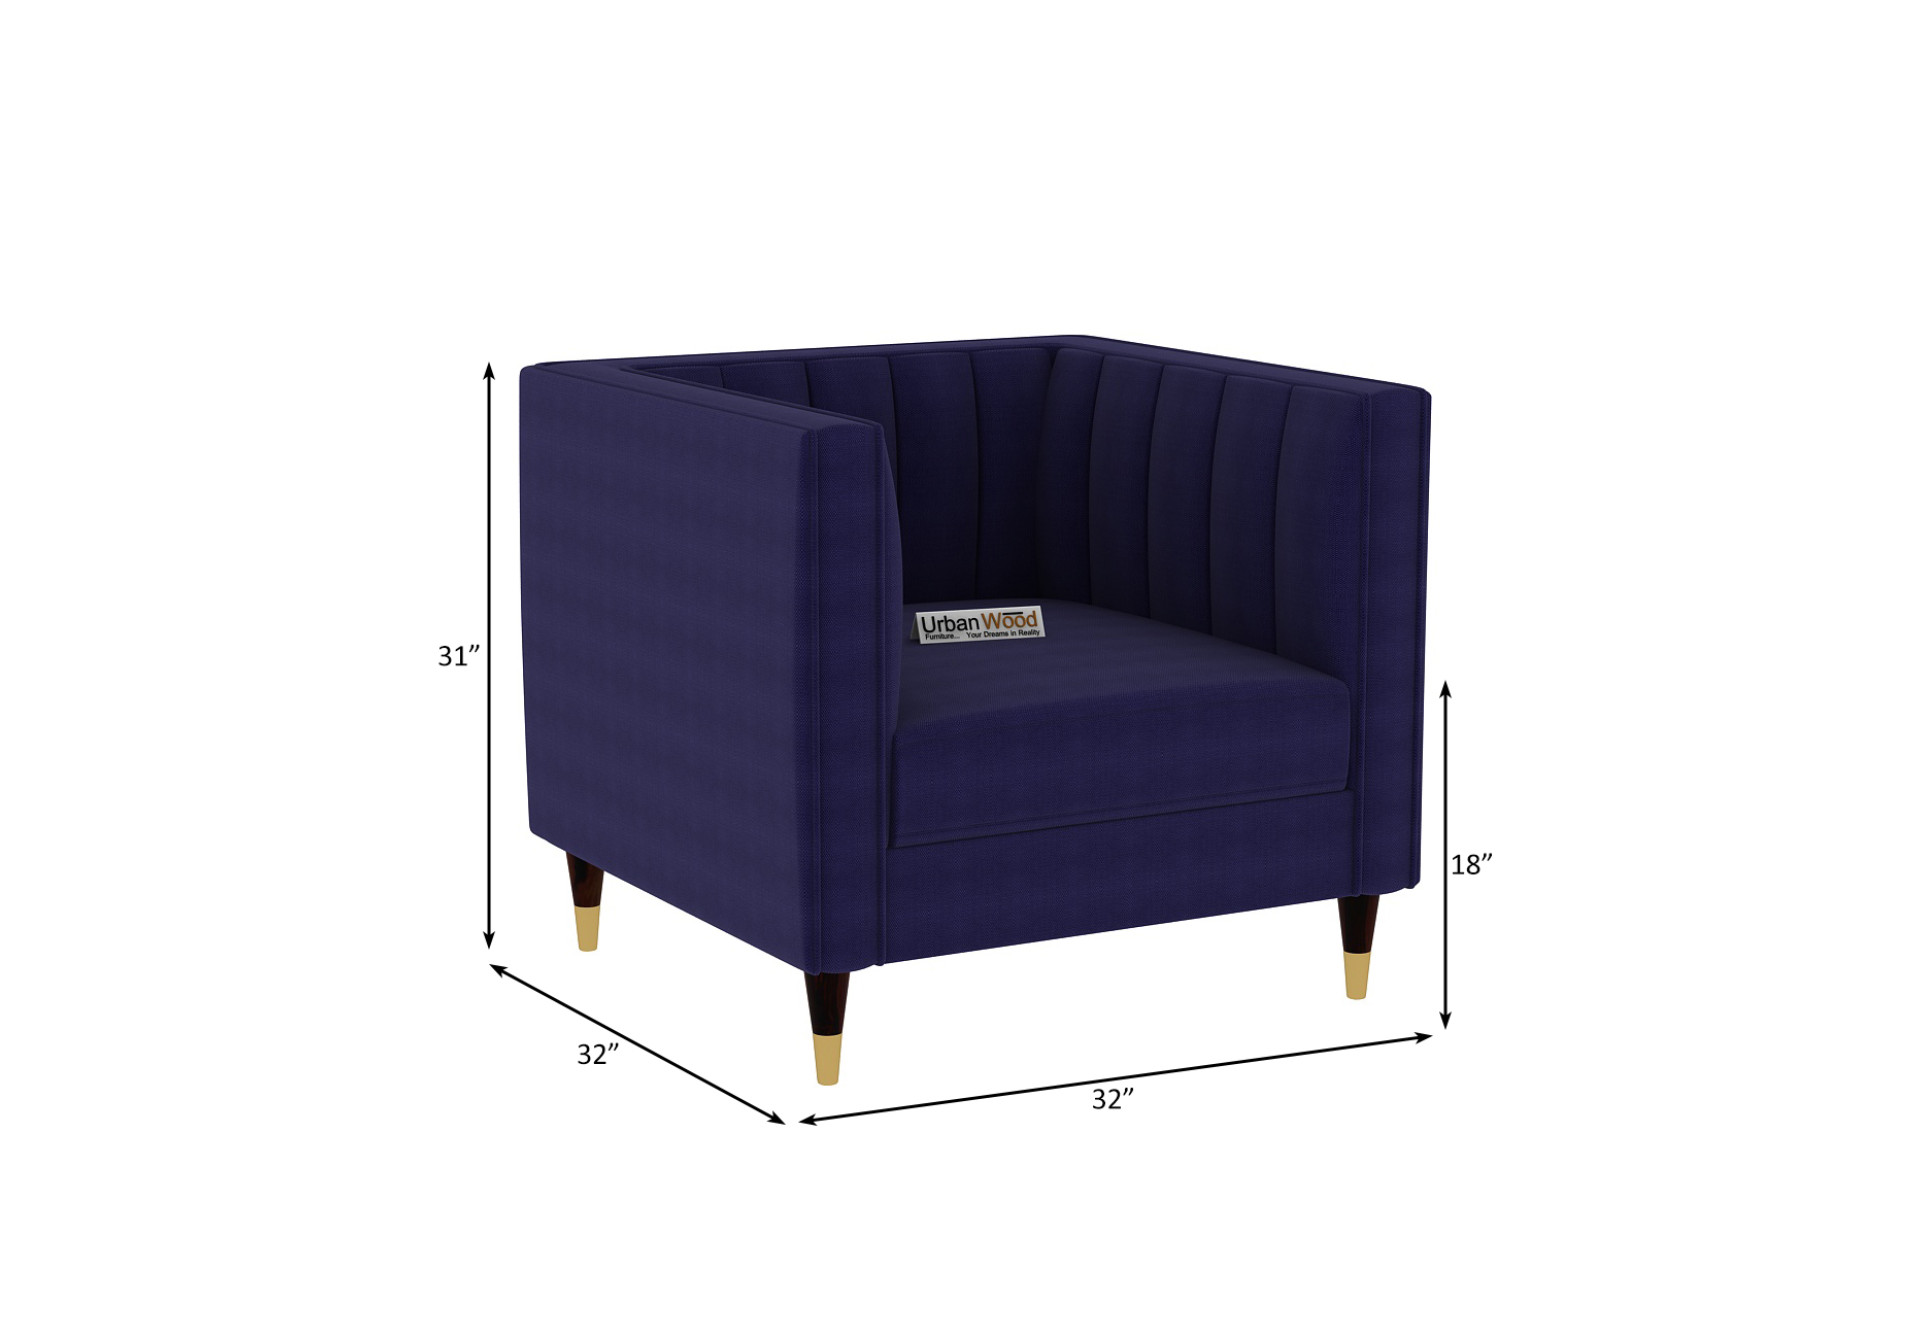 Abro 2+1+1 Seater Fabric Sofa (Cotton, Navy Blue)